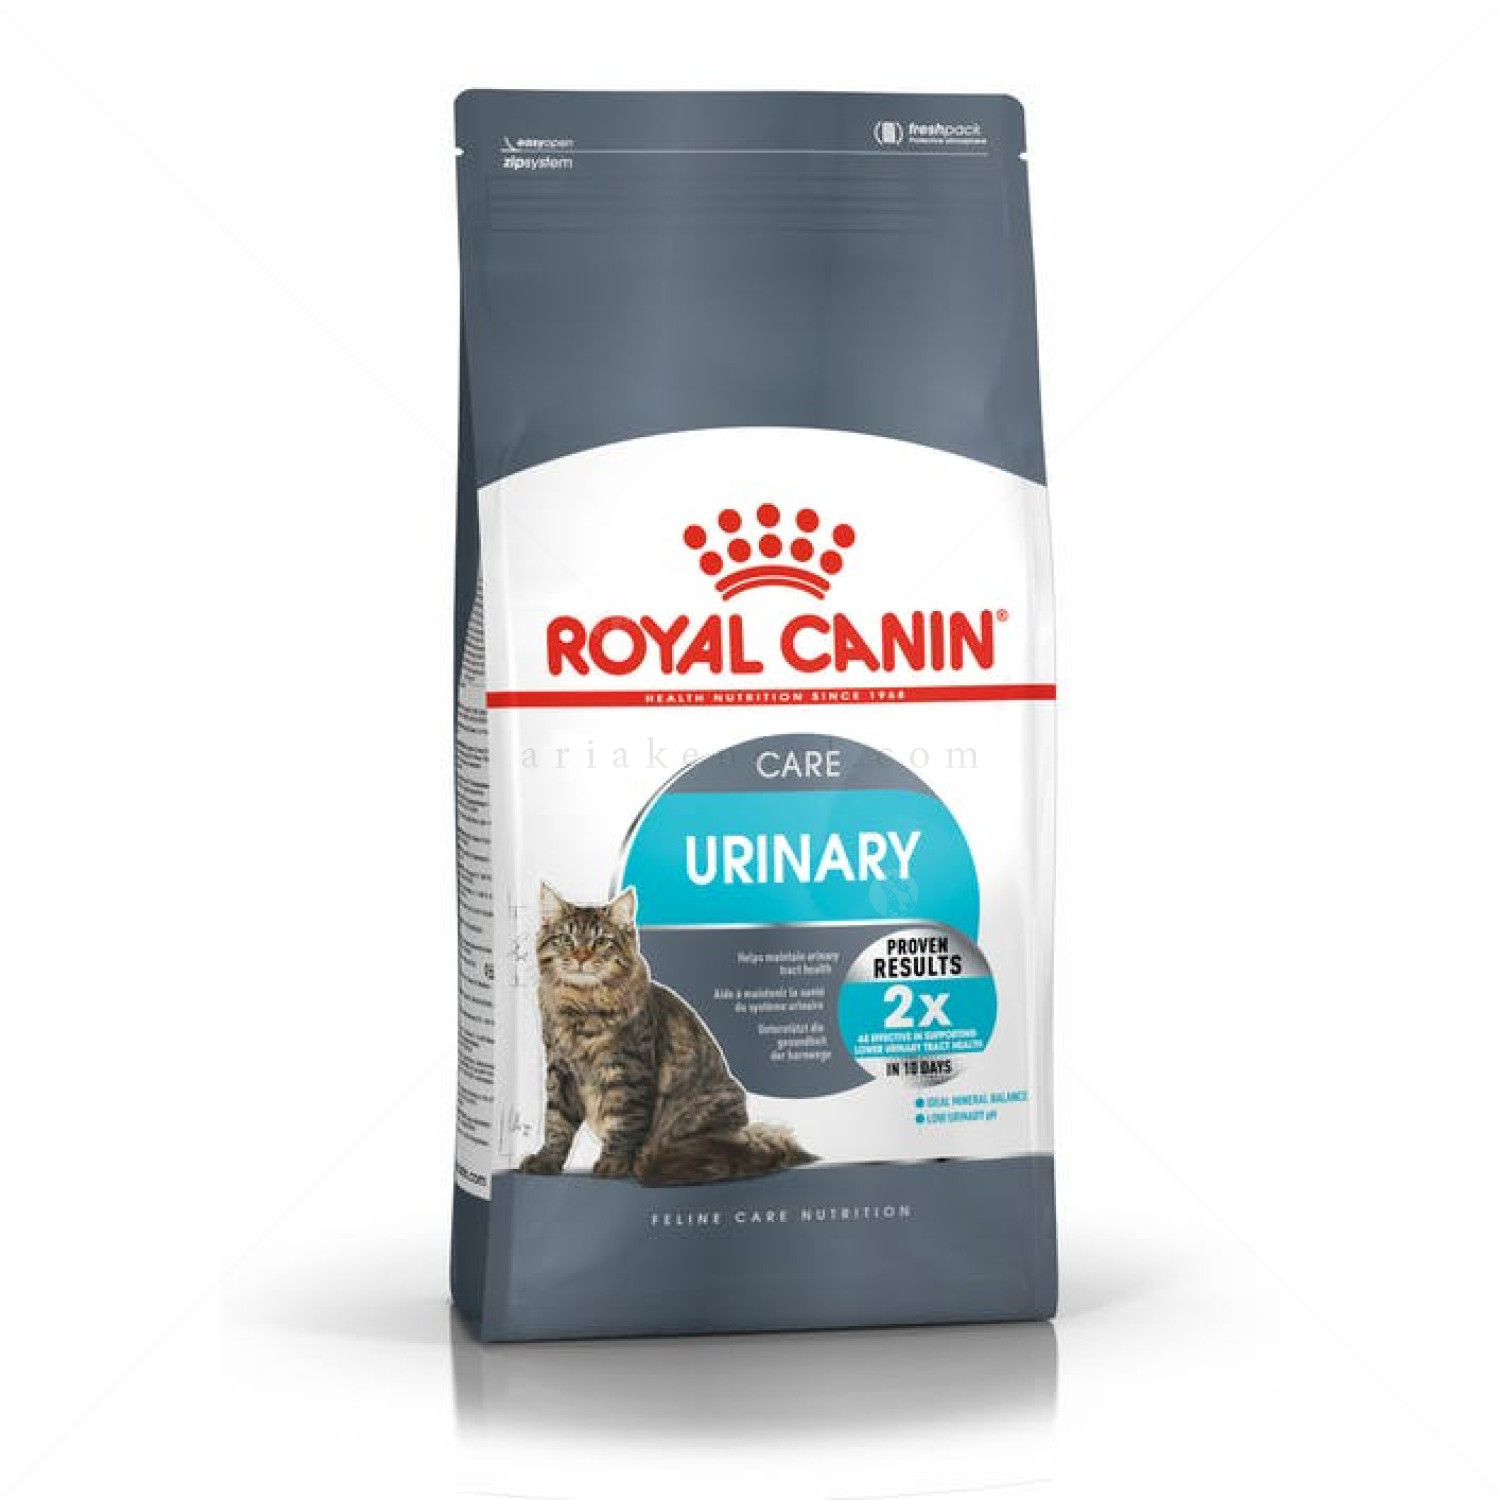 ROYAL CANIN 0.400 кг. Urinary Care